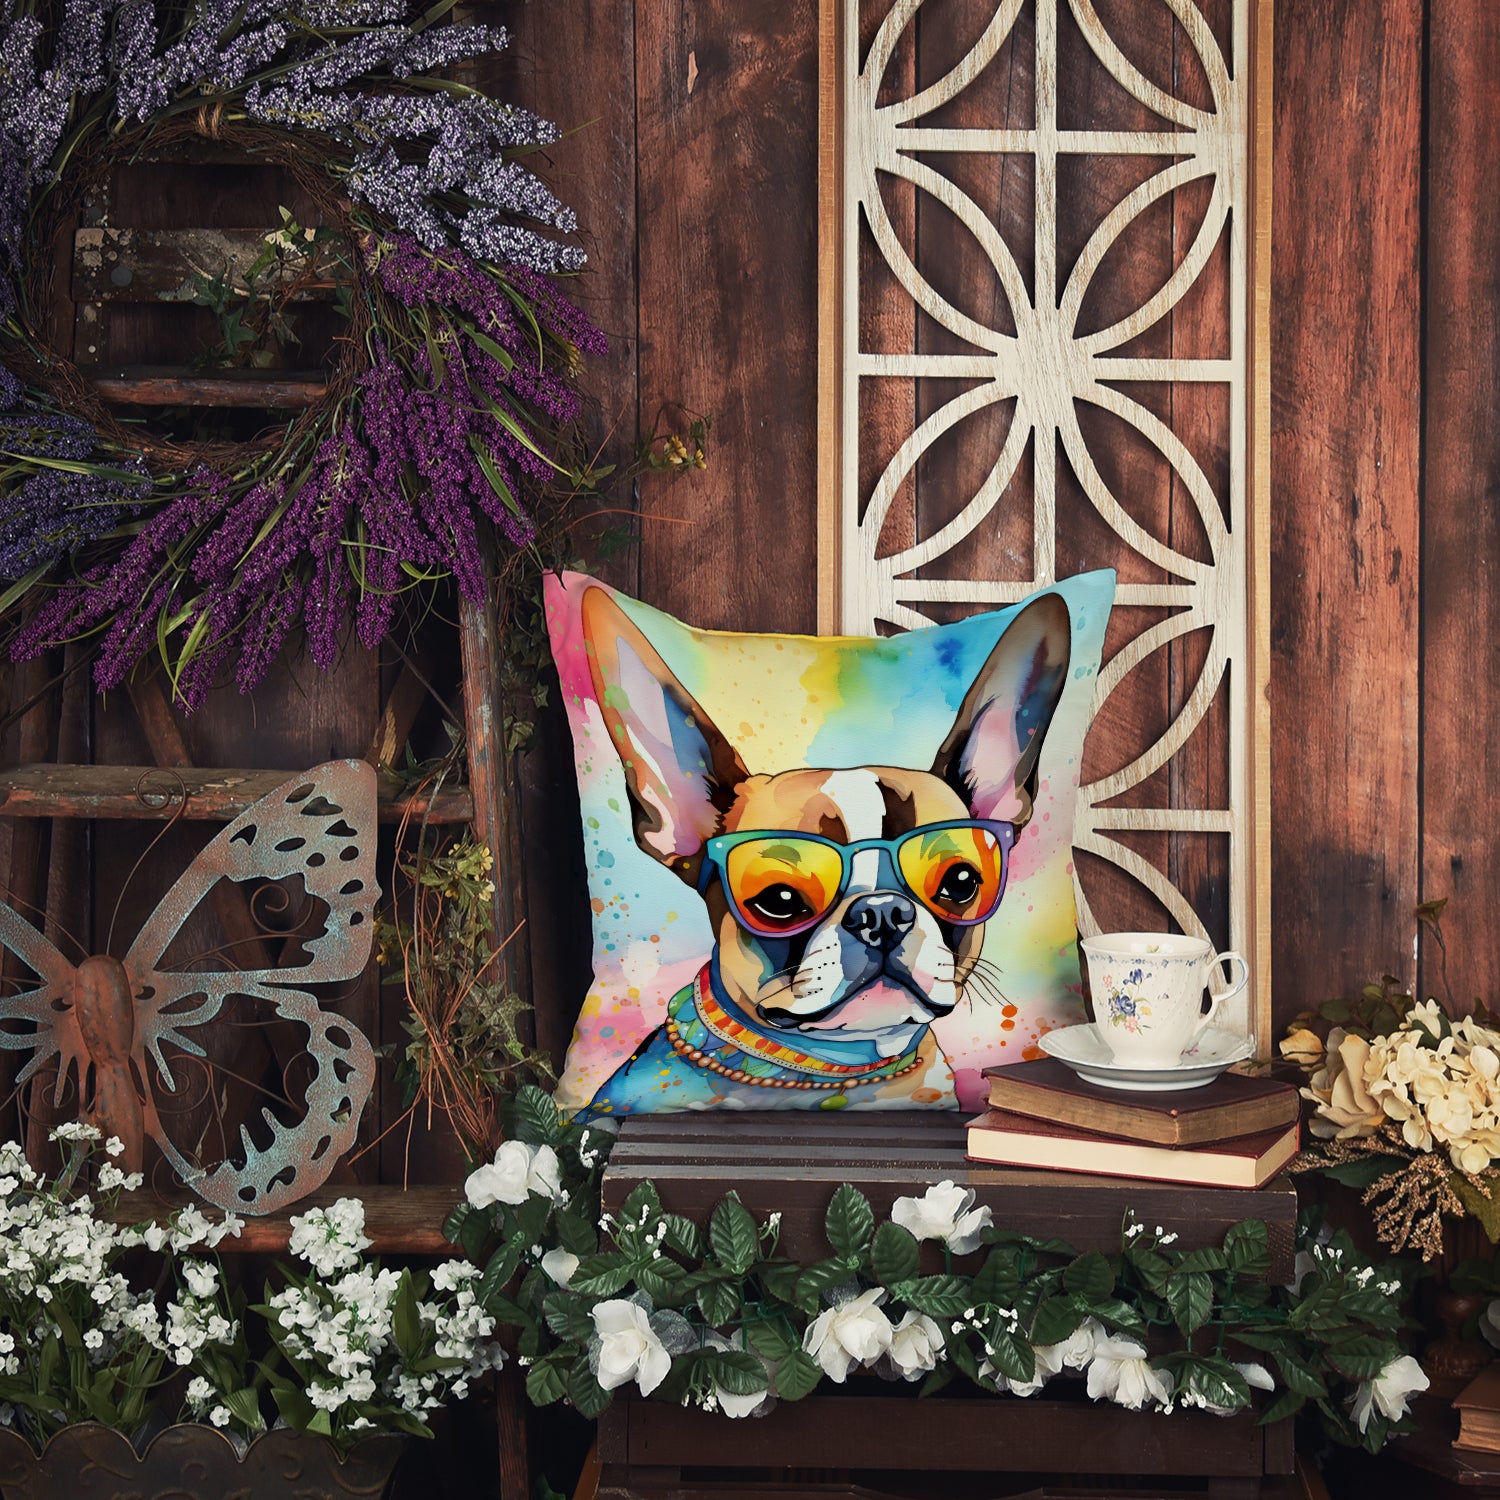 Boston Terrier Hippie Dawg Fabric Decorative Pillow